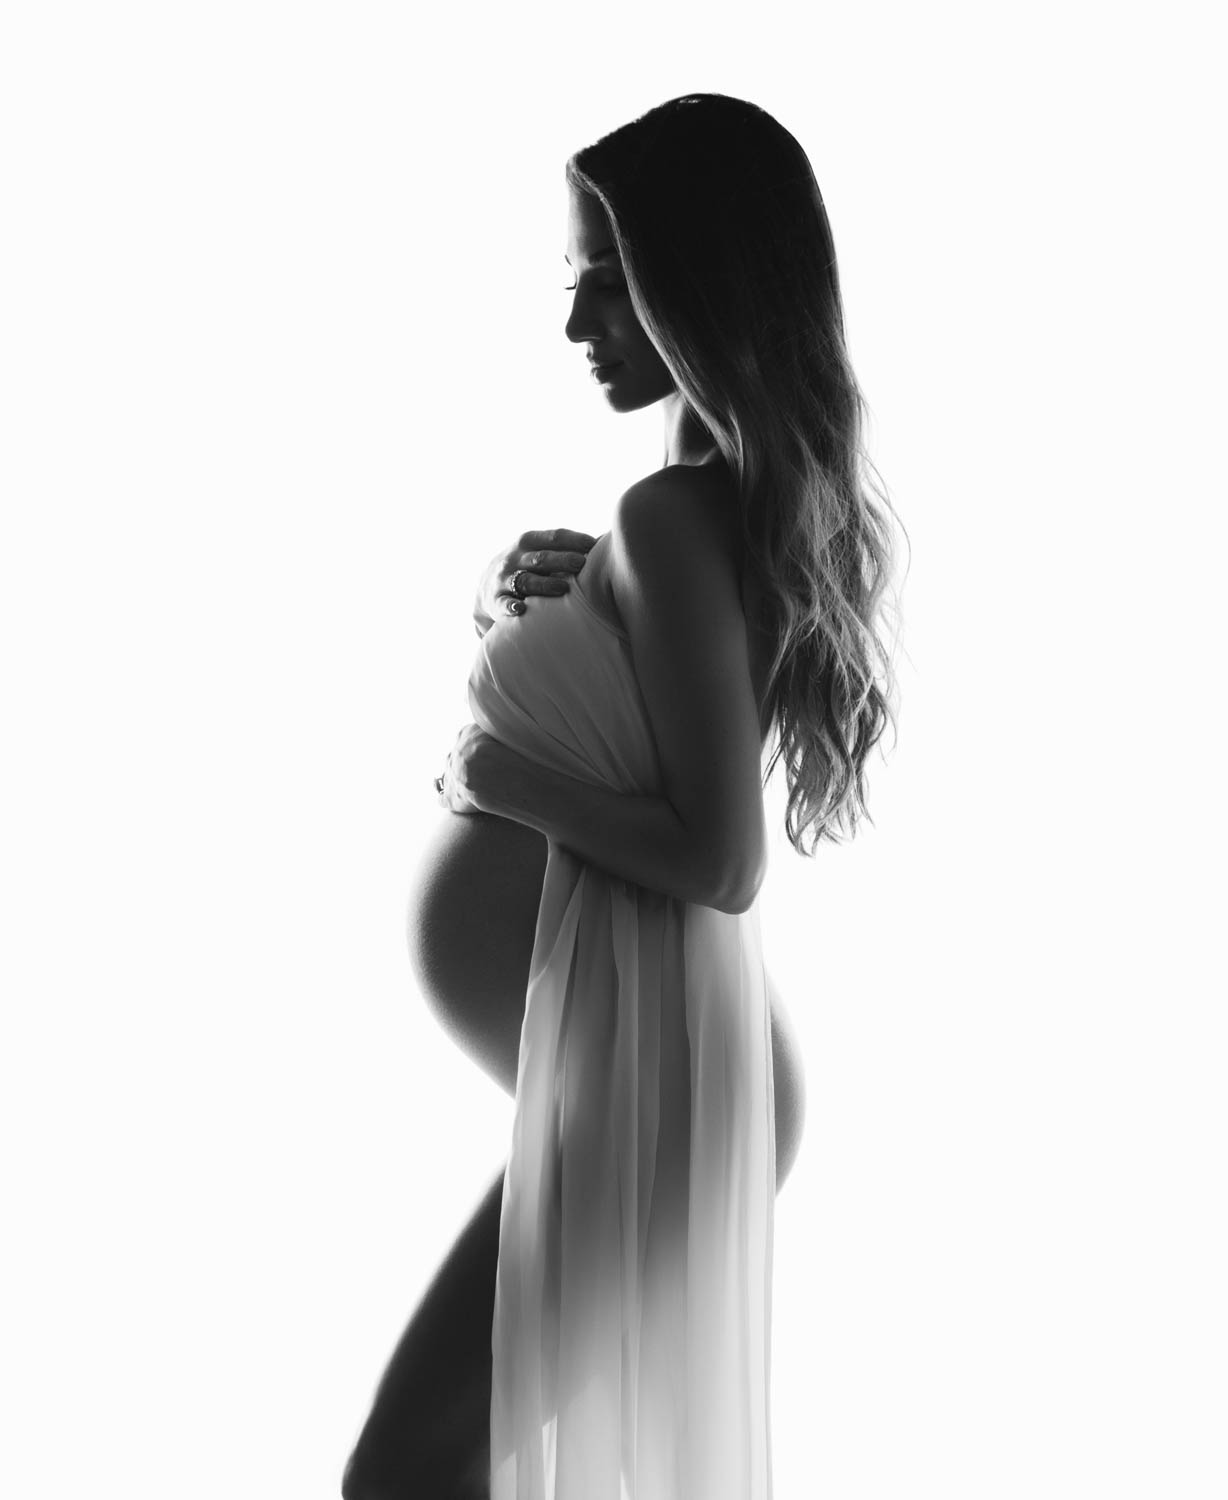 Artistic maternity photos, pregnancy portraits and newborn photography by Lola Melani. NYC maternity photographer&nbsp;